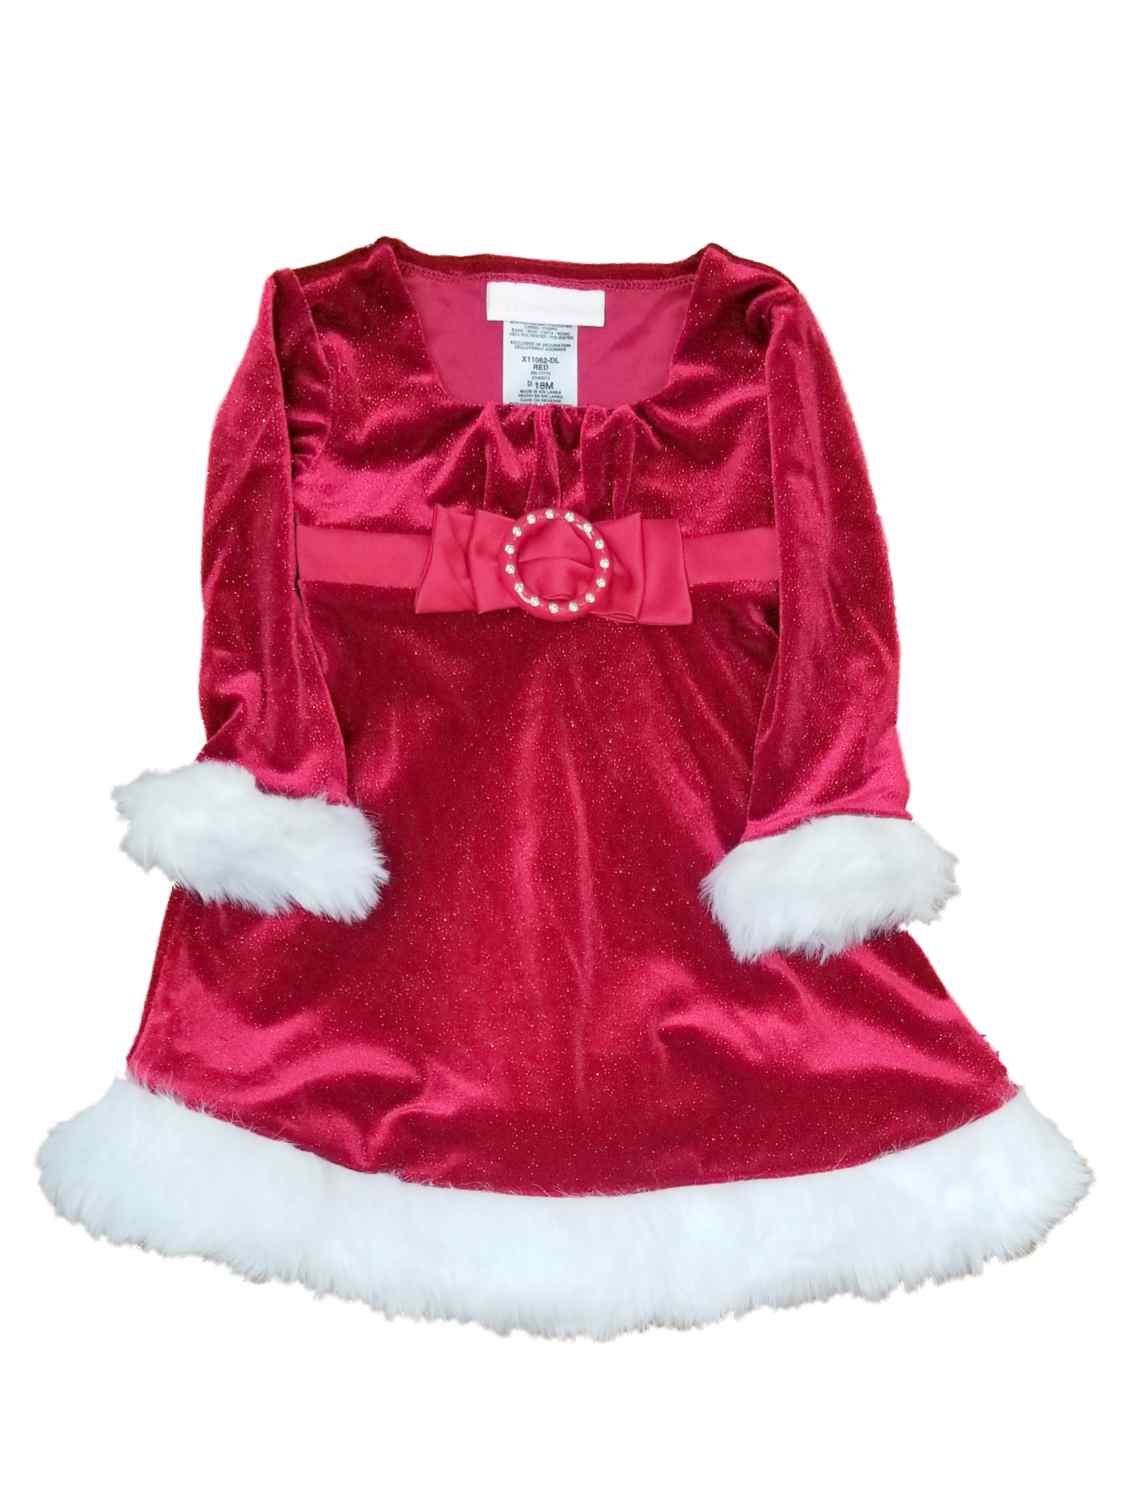 Bonnie Baby Infant Baby Girls Red Santa Rhinestone Christmas Holiday Fancy Party Dress